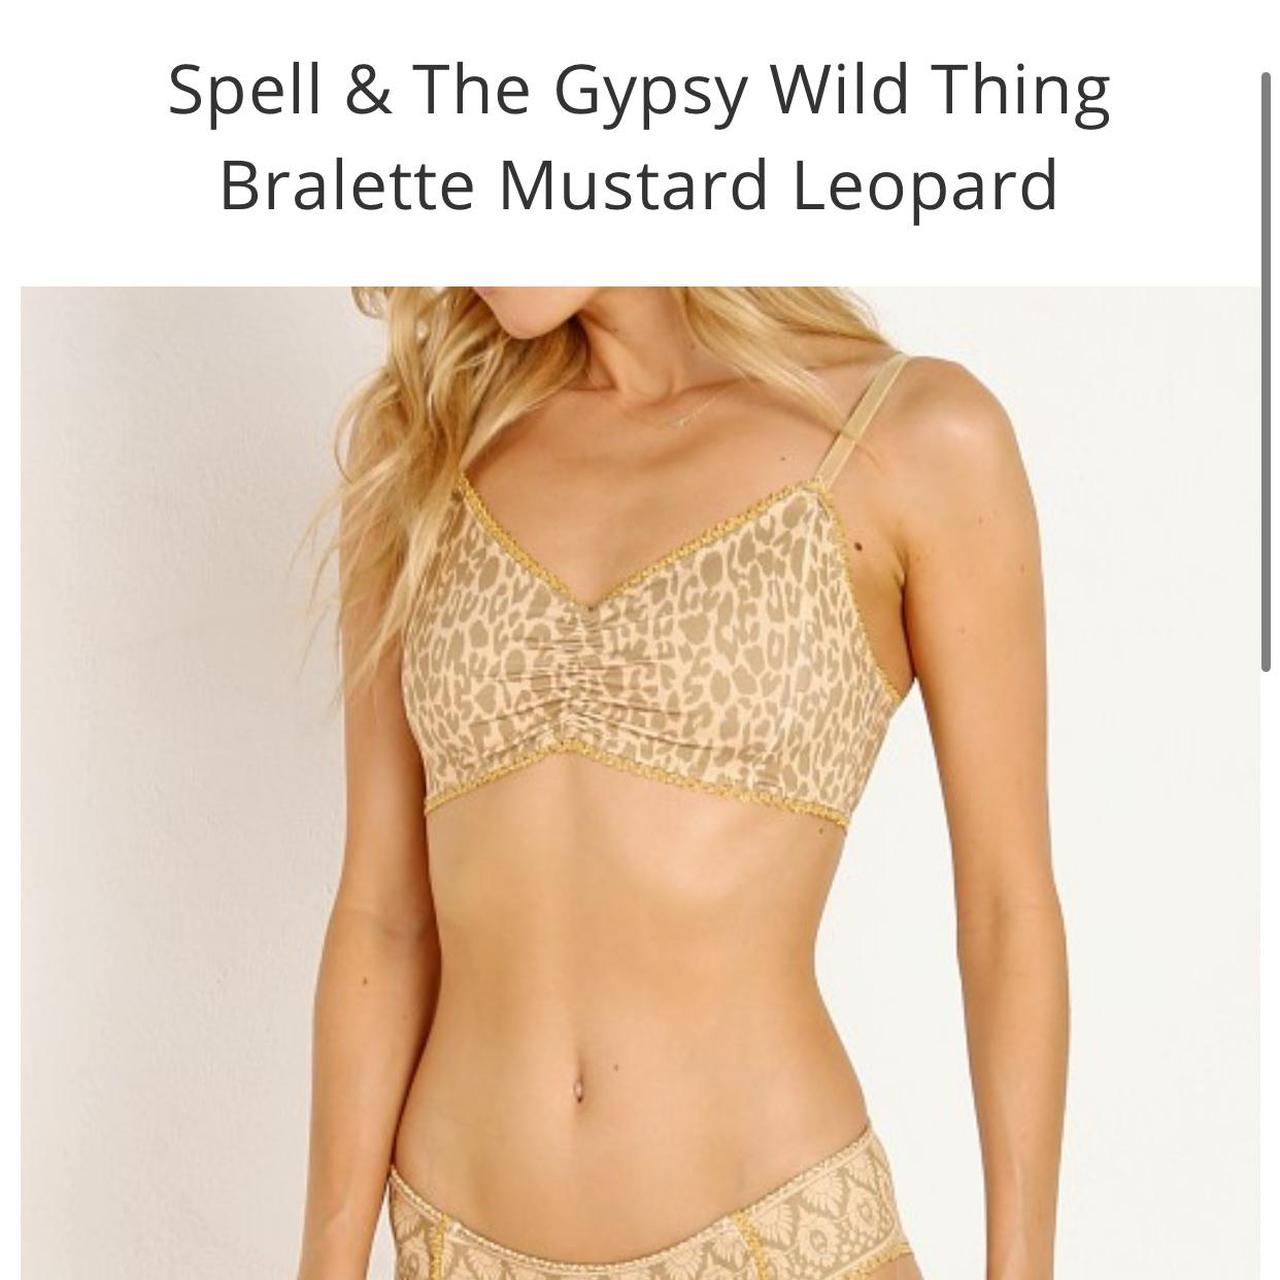 Spell & The Gypsy Wild Thing Bralette Mustard Leopard - Depop